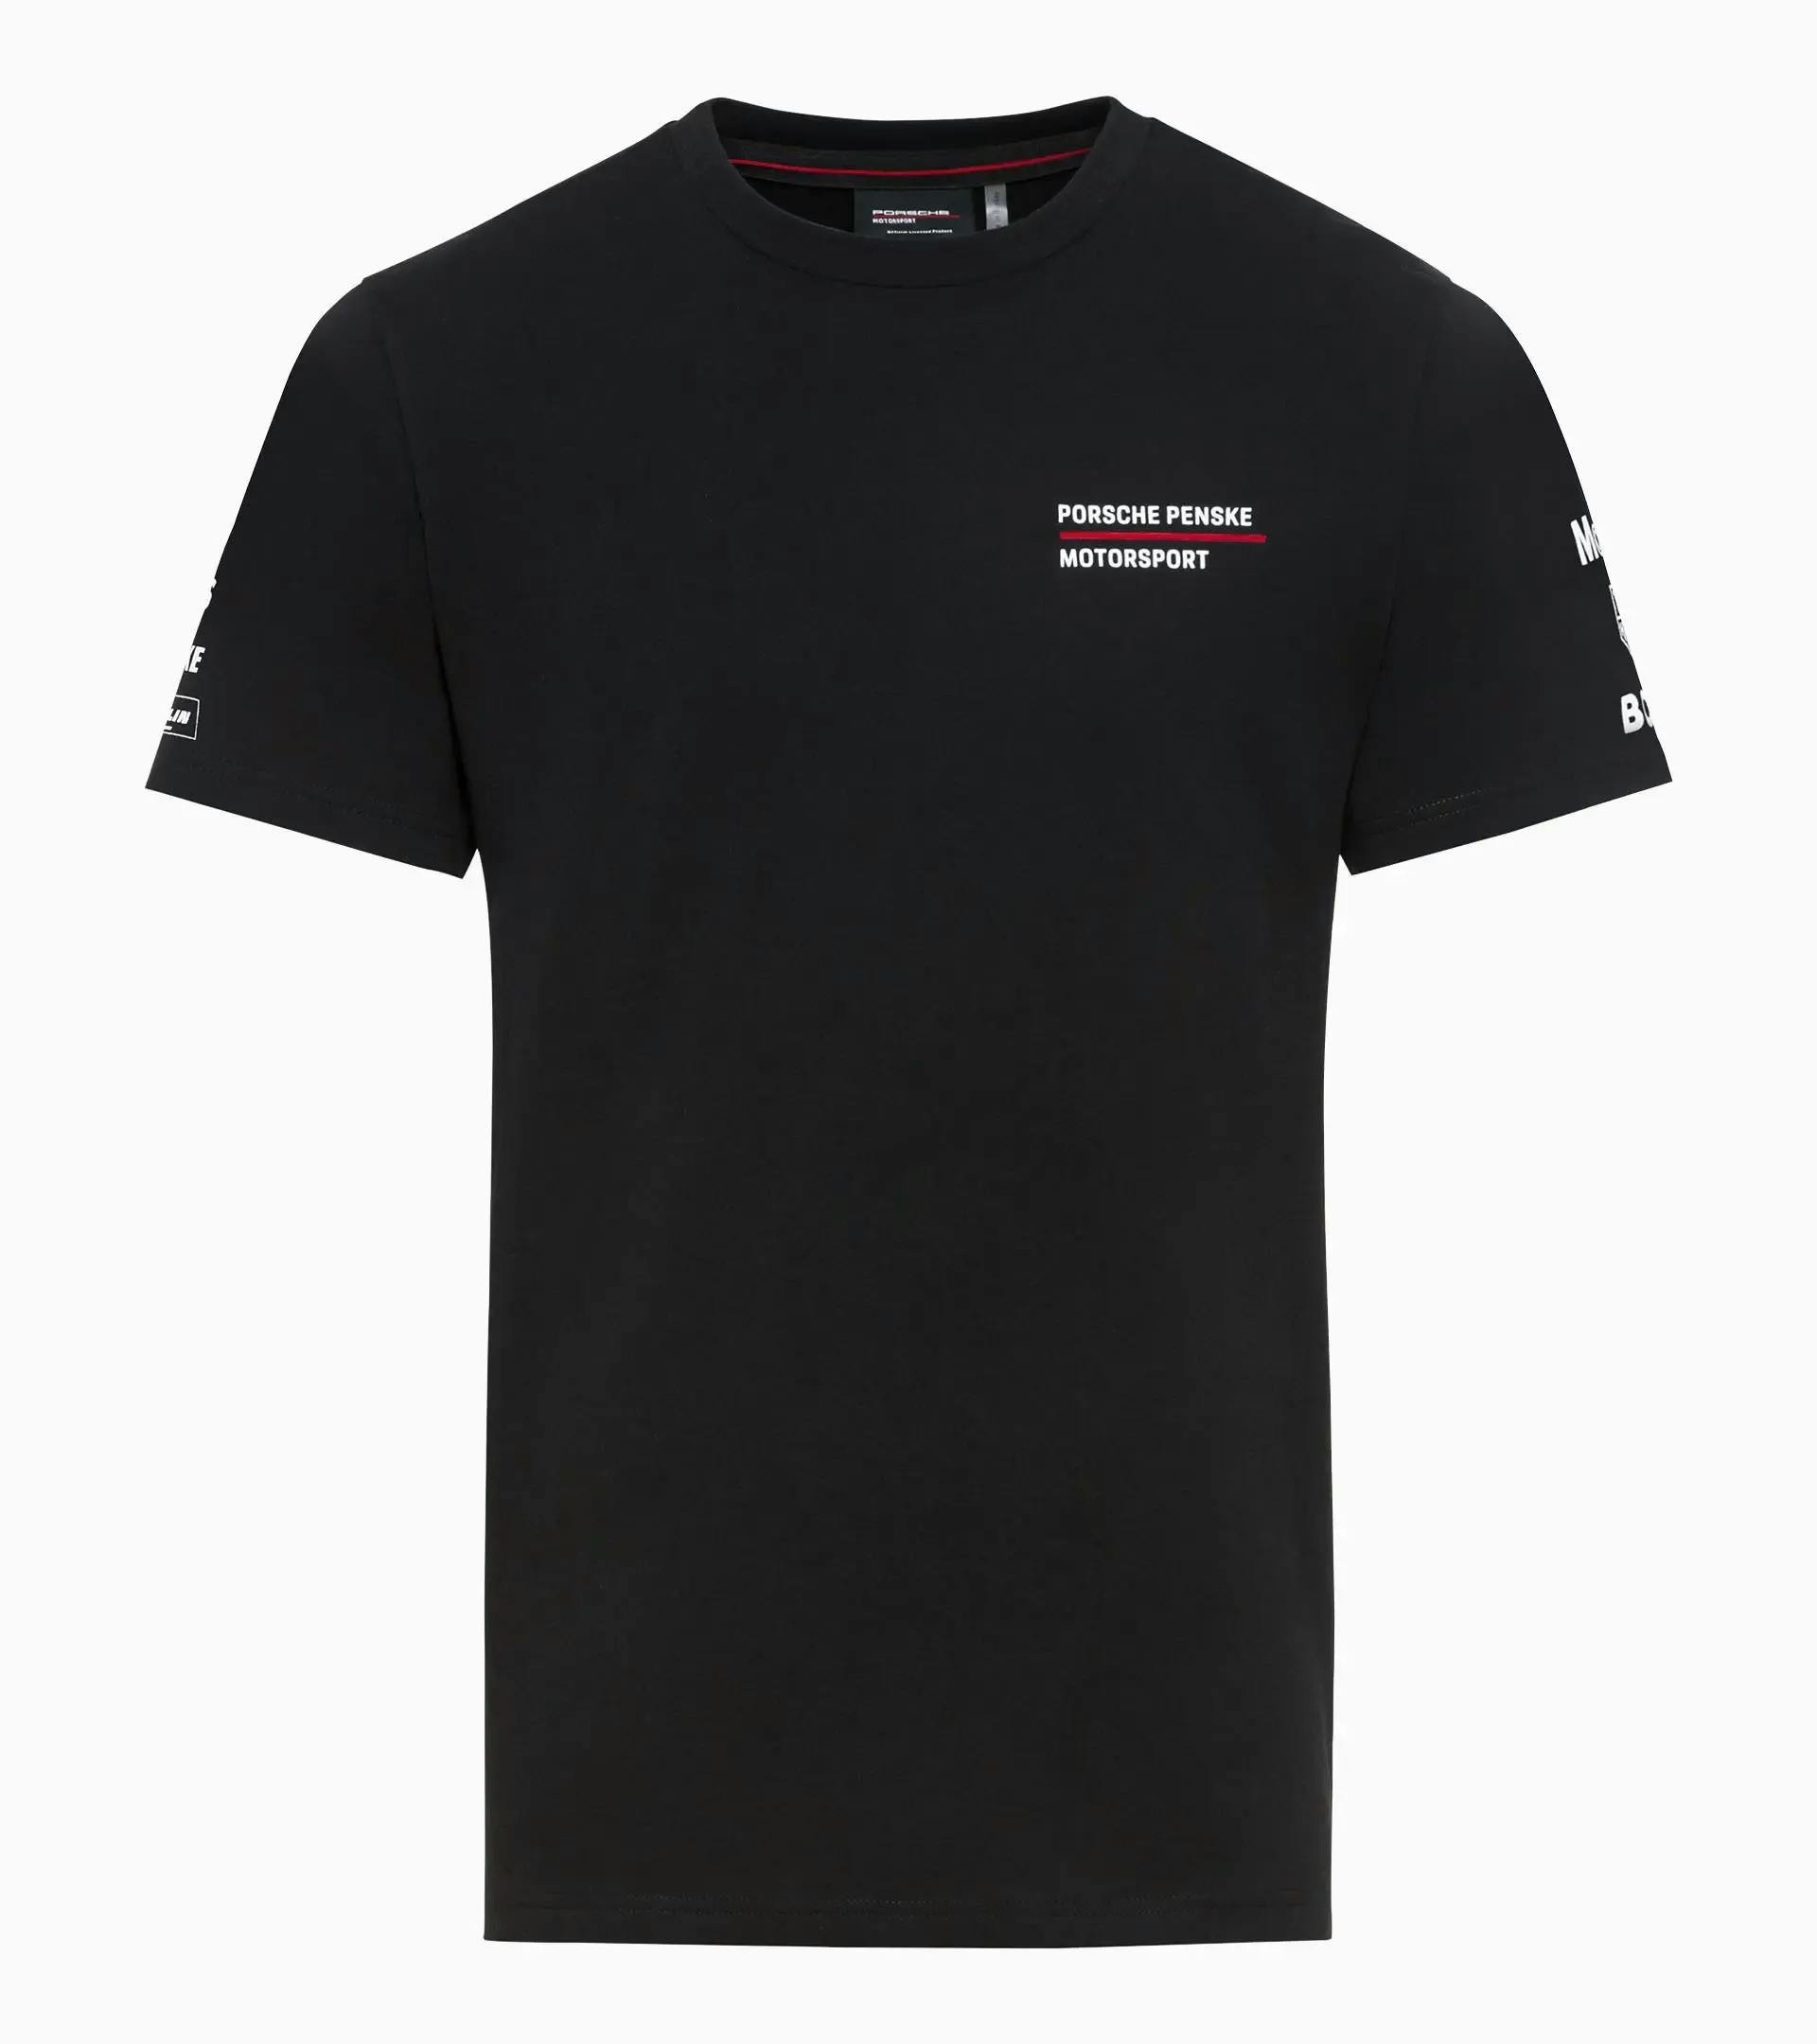 T-shirt unisexe – Porsche Penske Motorsport 1